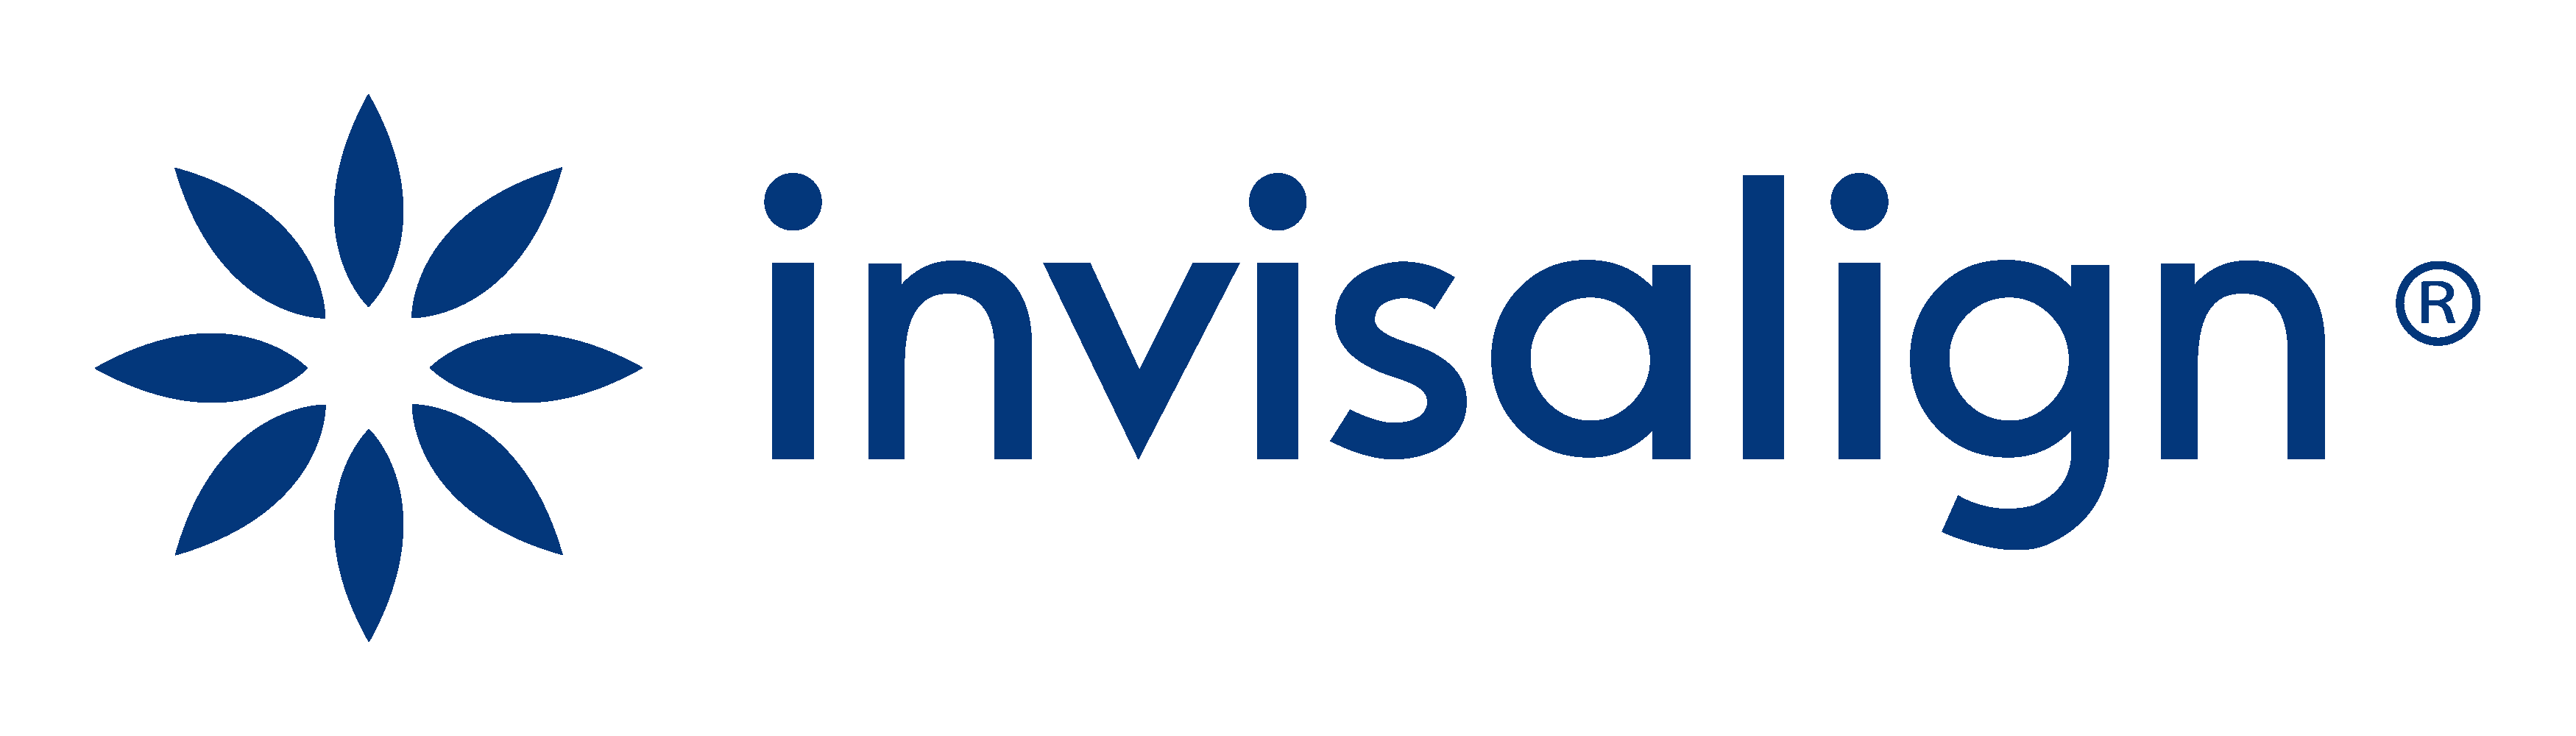 Invisalign-Logo